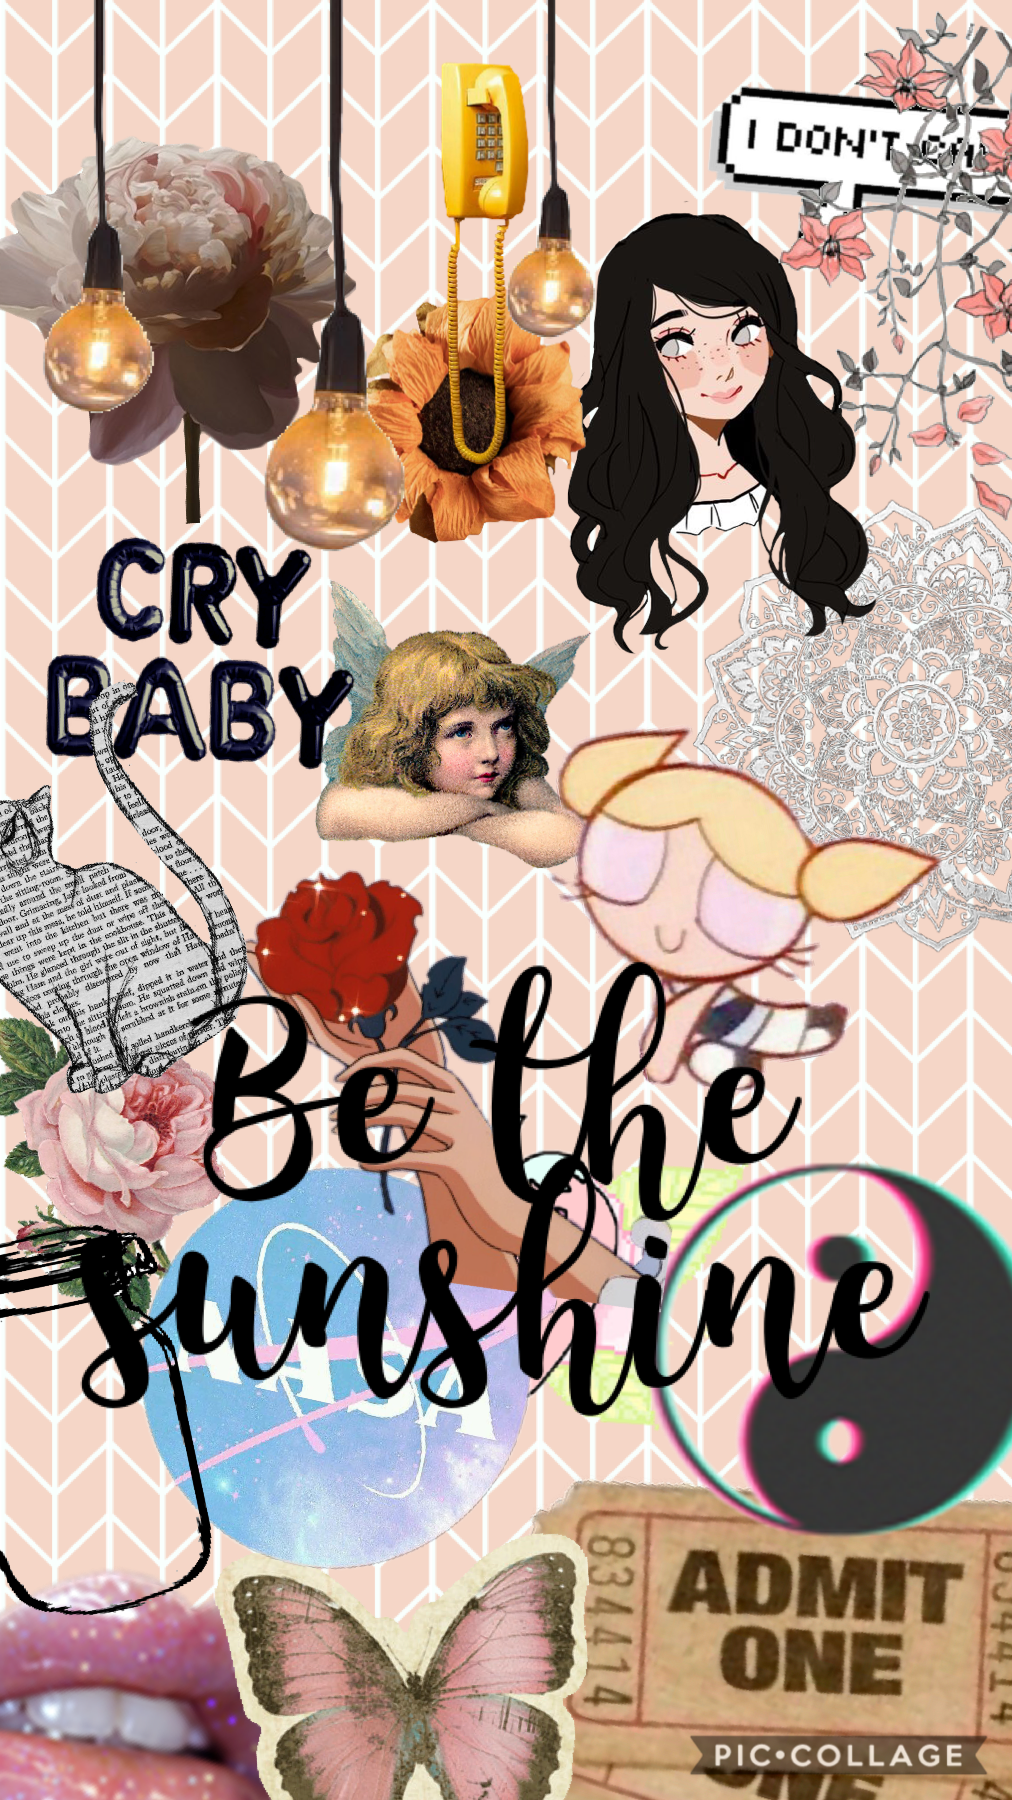 𓃗tap𓃗
Be the sunshine 